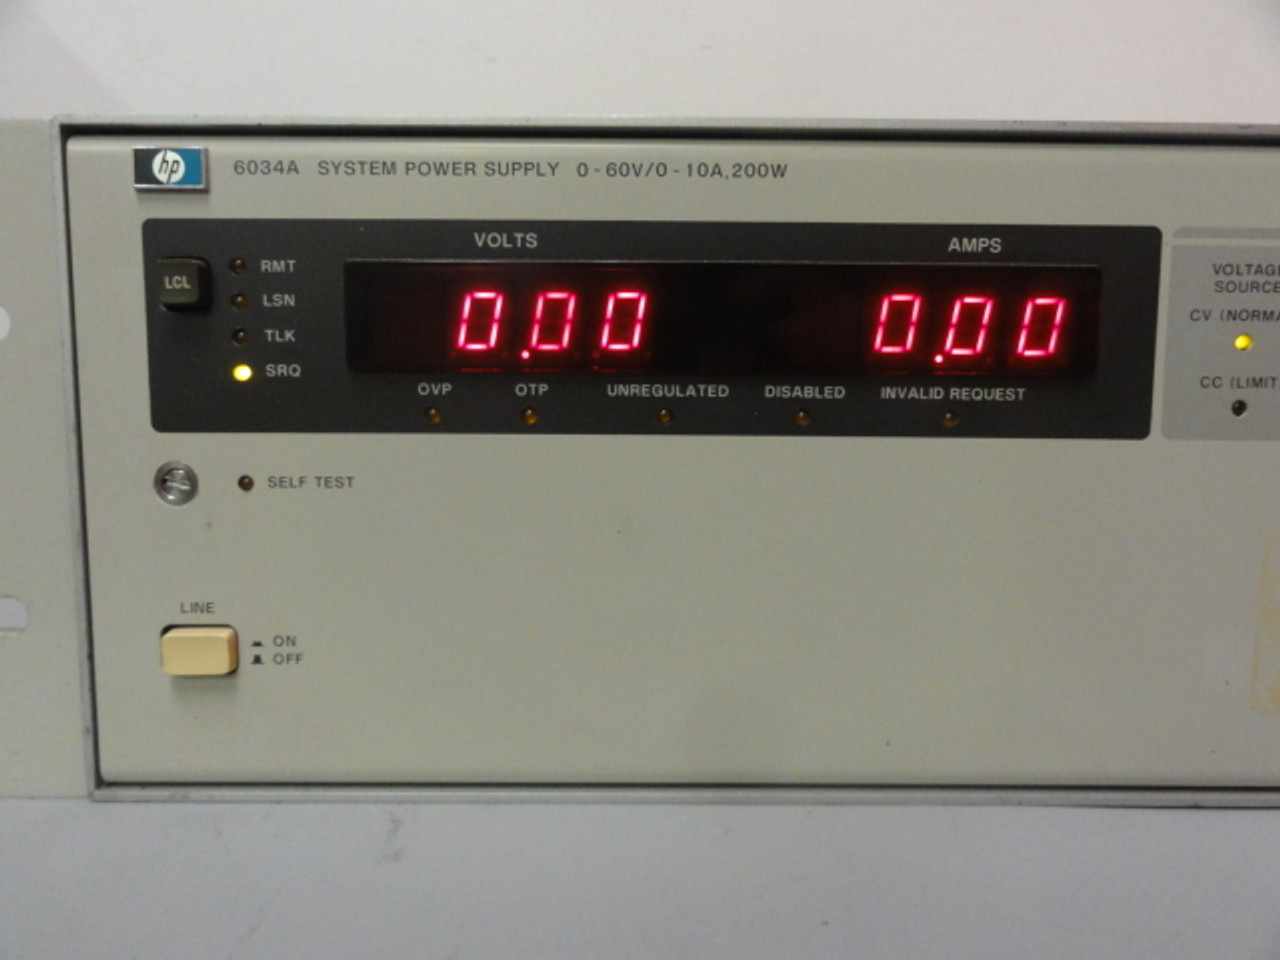 HP 6034A System Power Supply, 0-60V/0-10A, 200W